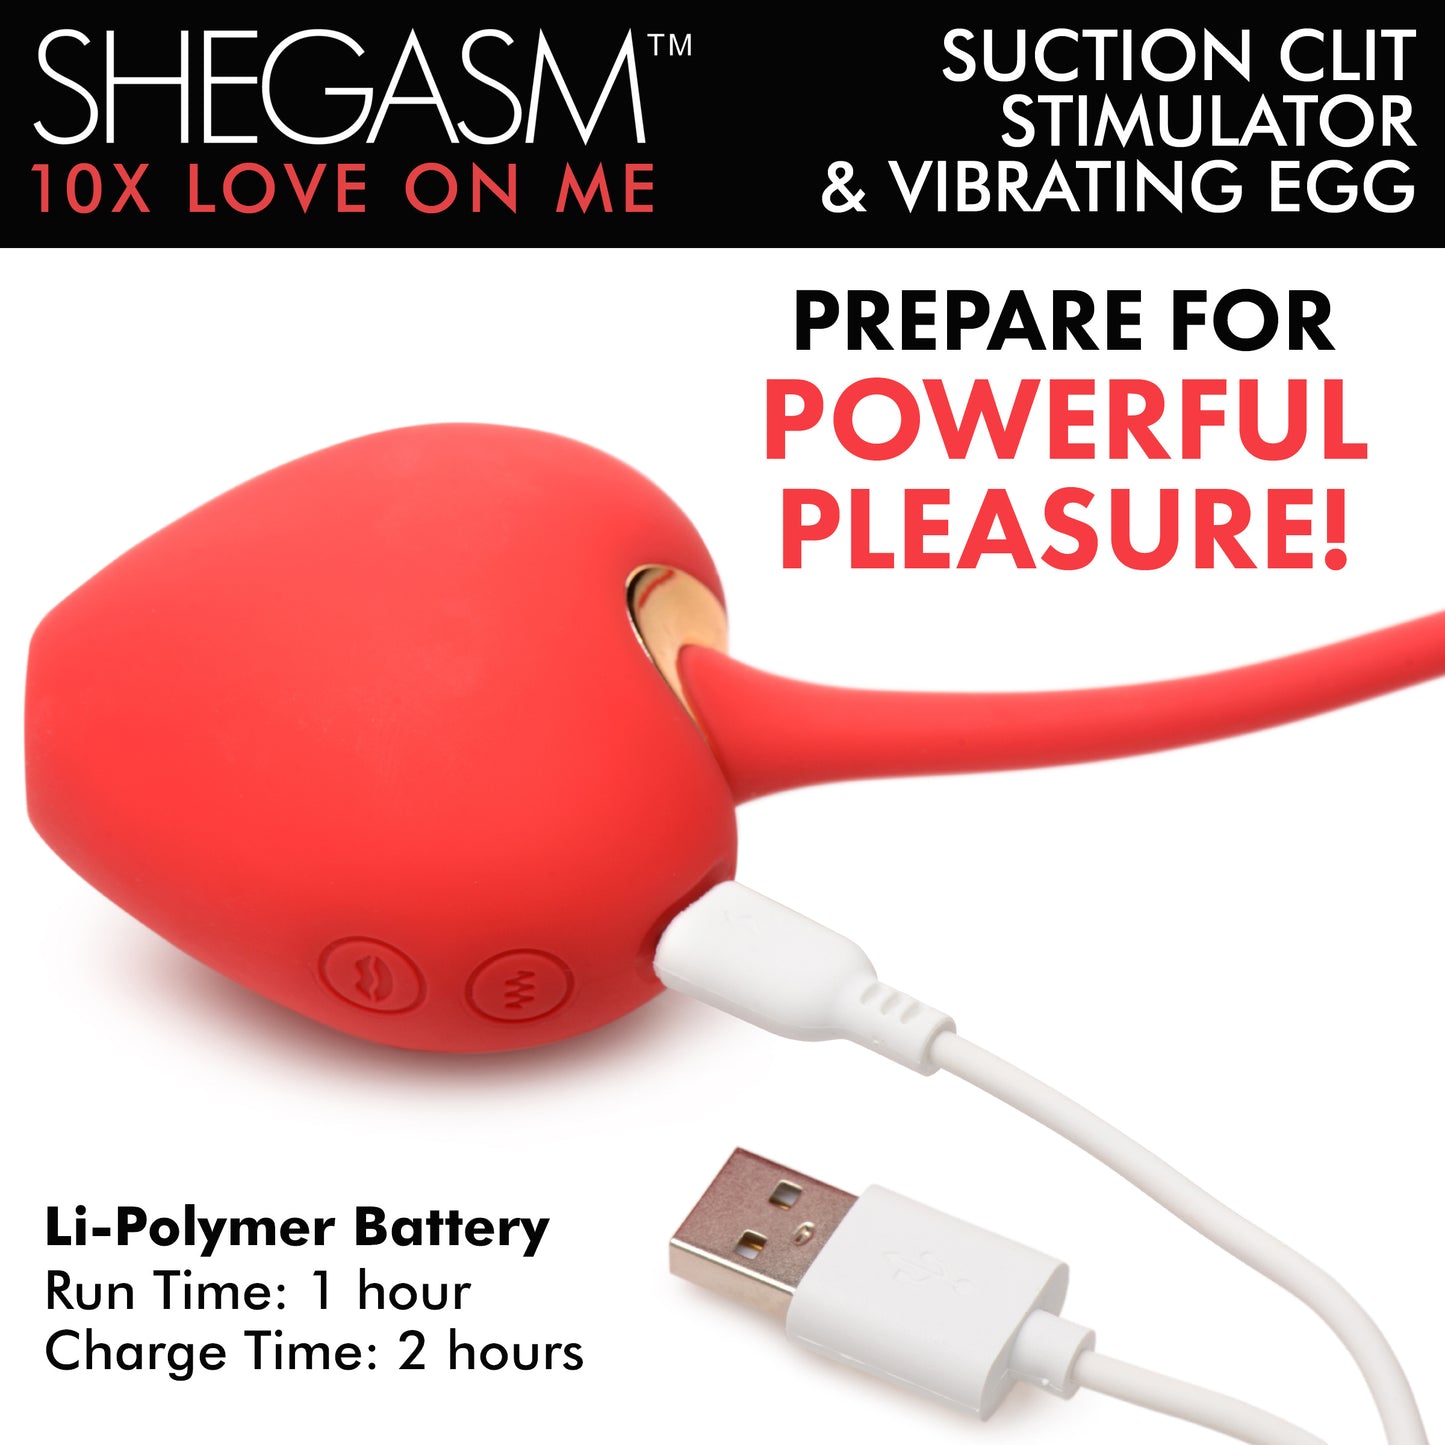 10X Love on Me Suction Clit Stimulator and Vibrating Egg - UABDSM